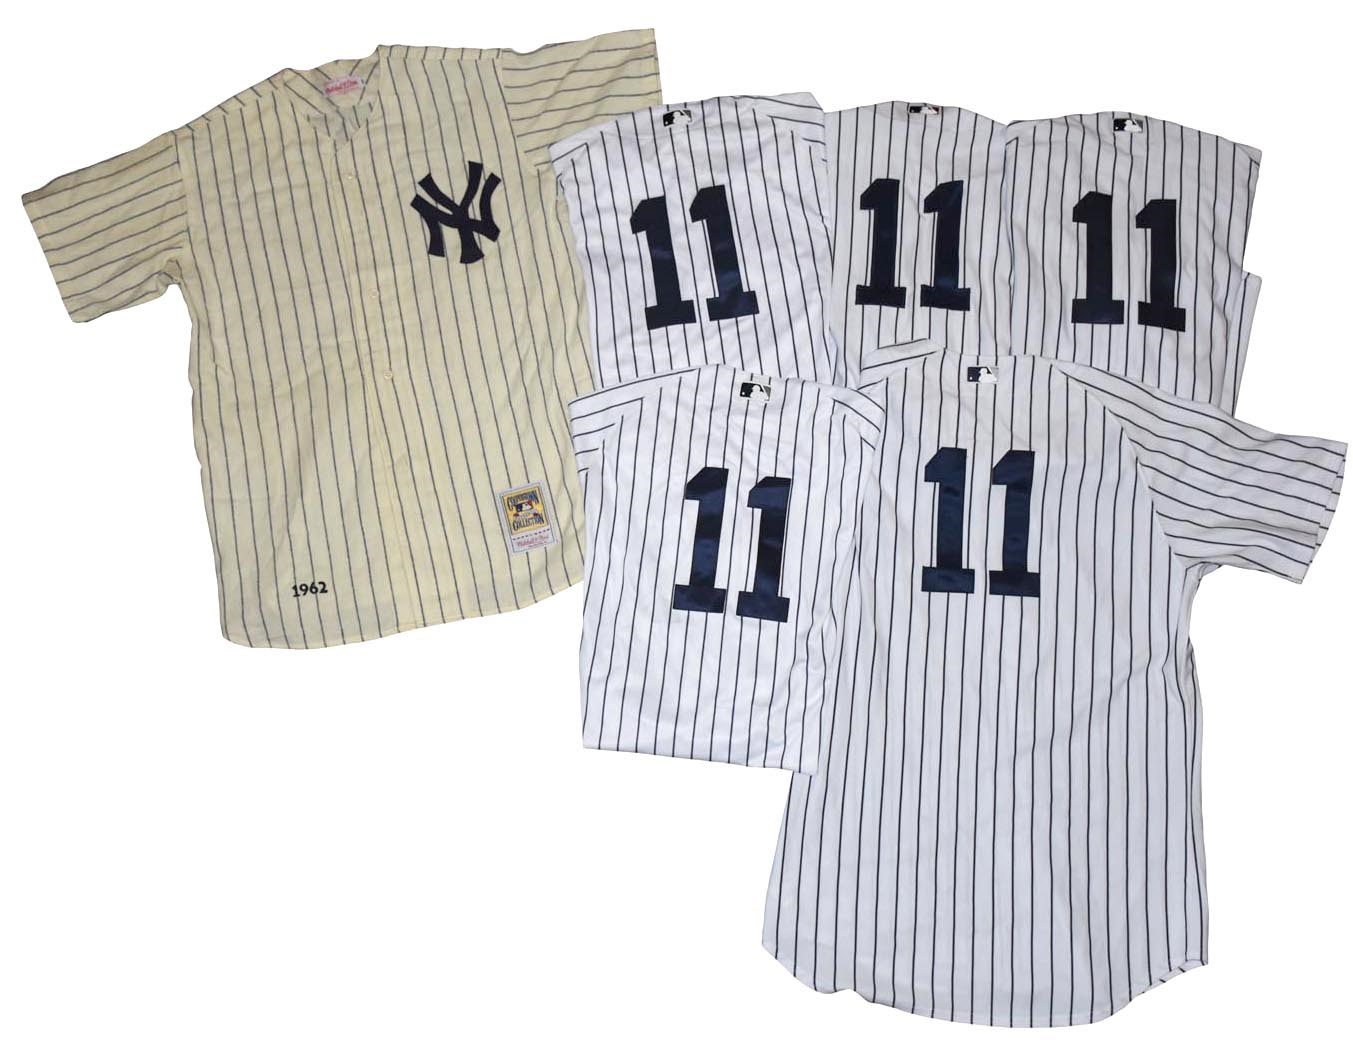 - Hector Lopez NY Yankees Uniform Collection (16 Pieces)